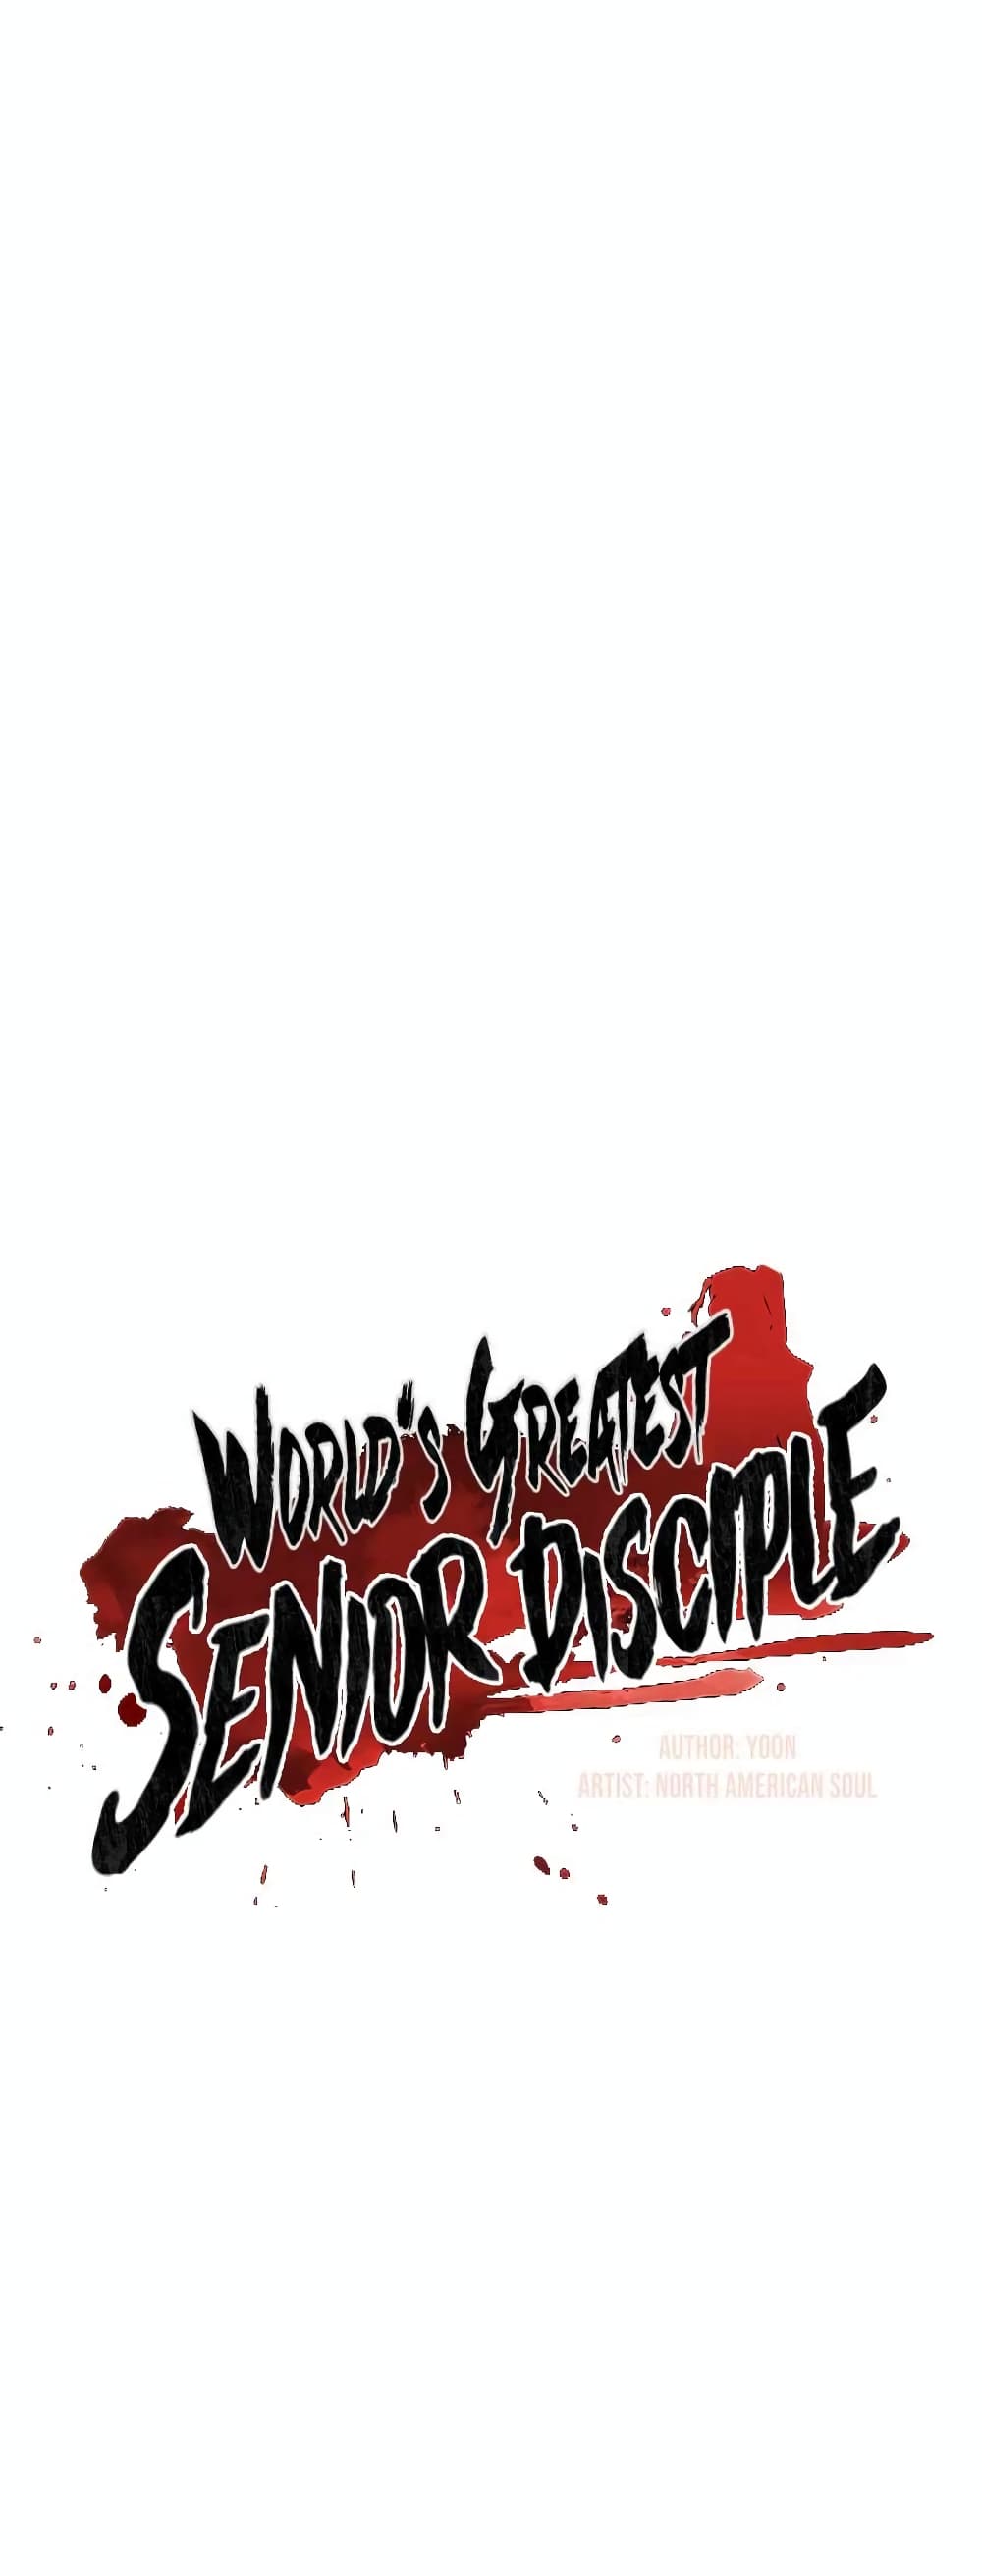 World’s Greatest Senior Disciple 44-44